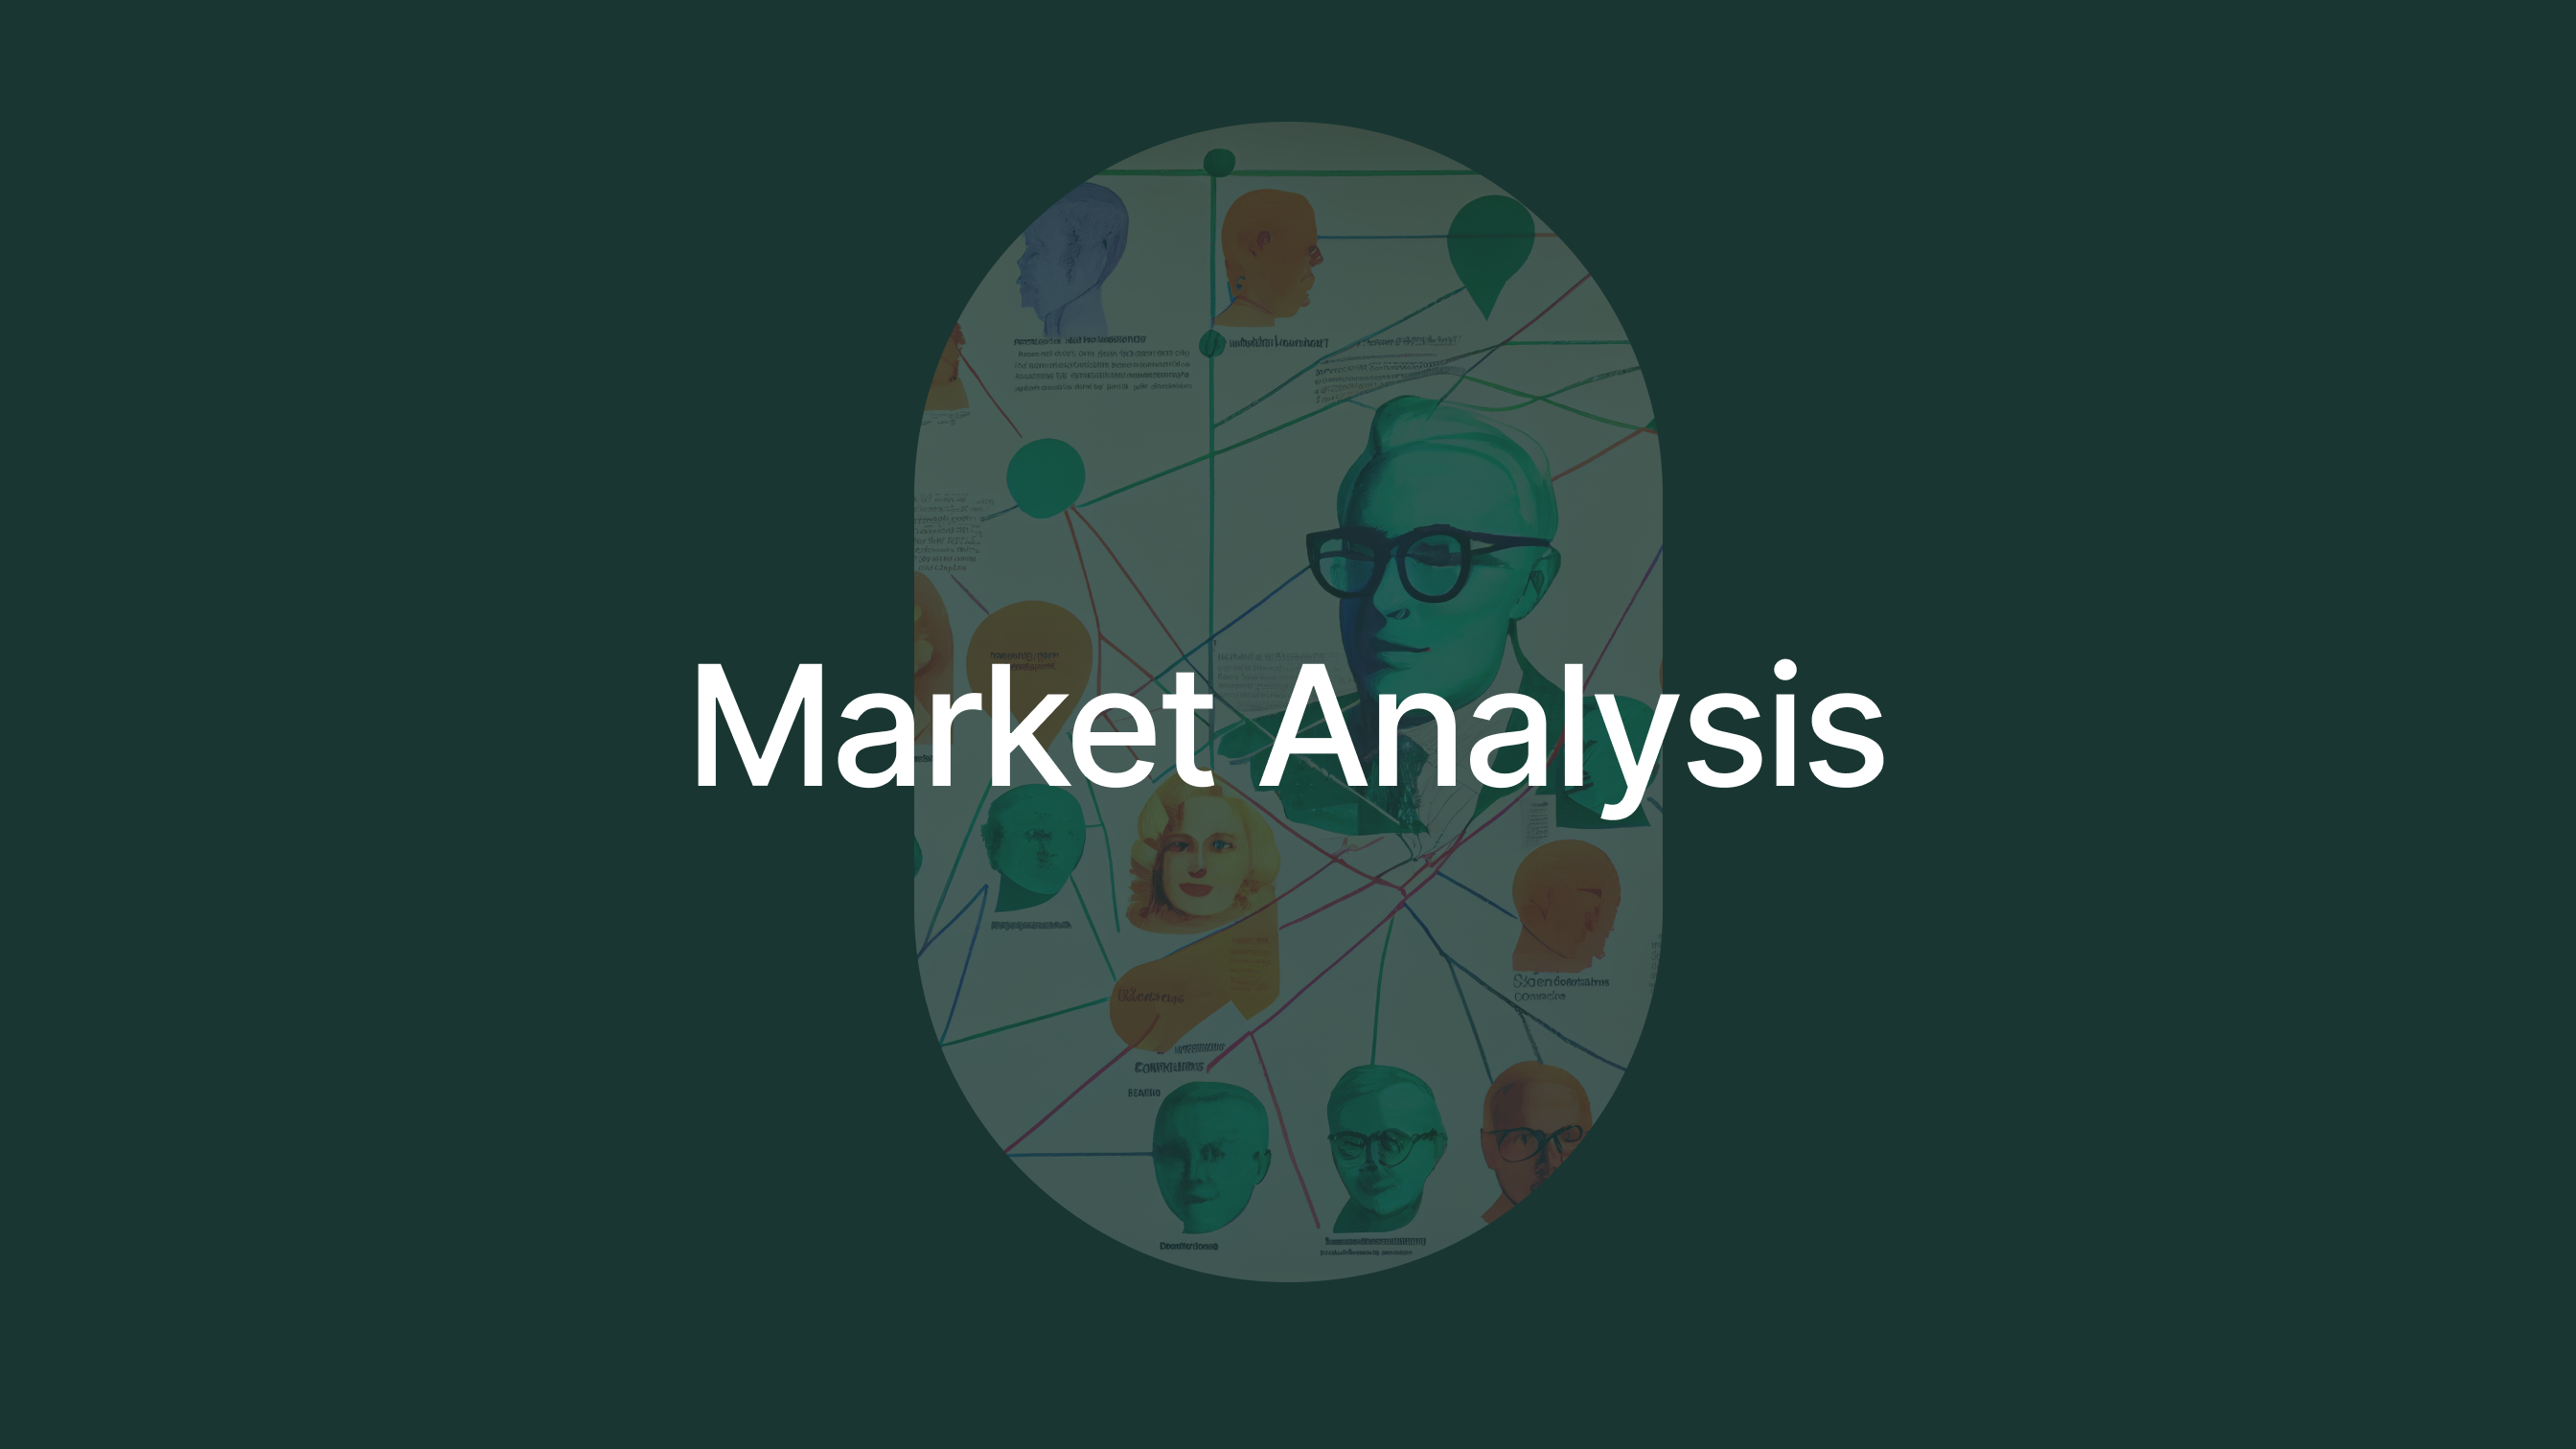 Market Analysis - Understanding Trends, Risks, and Opportunities